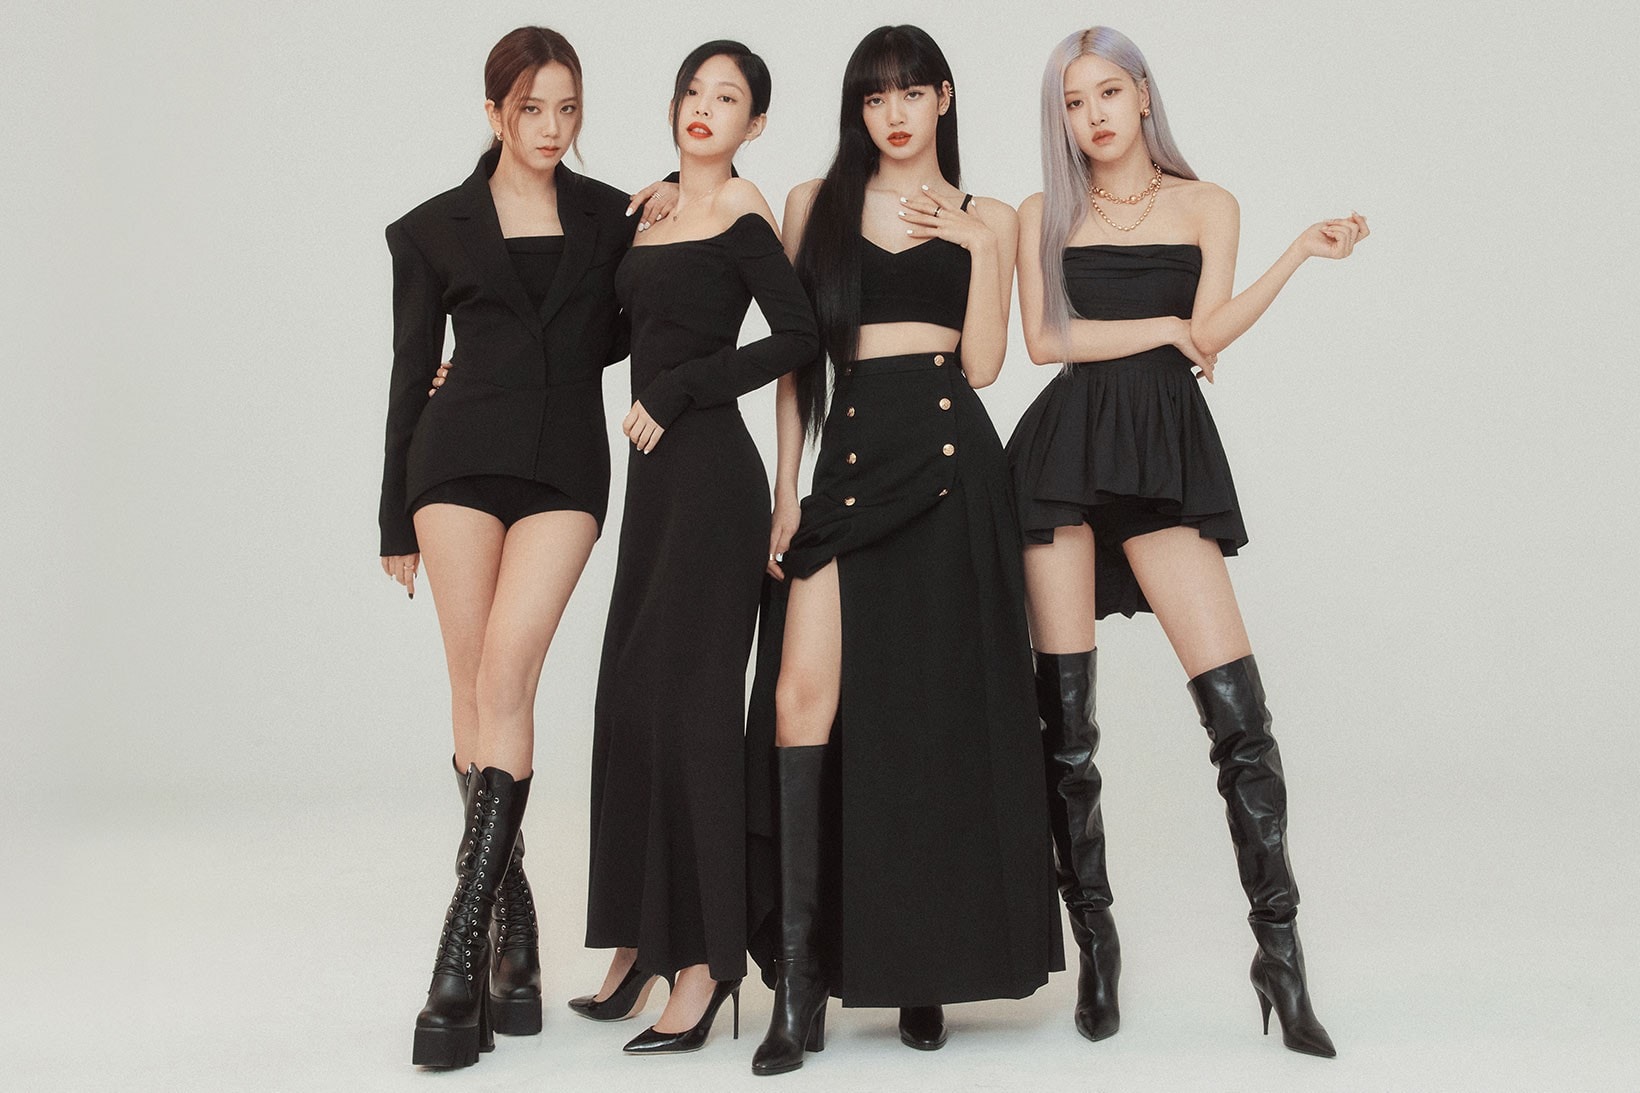 yg entertainment launching new k-pop girl group blackpink info 